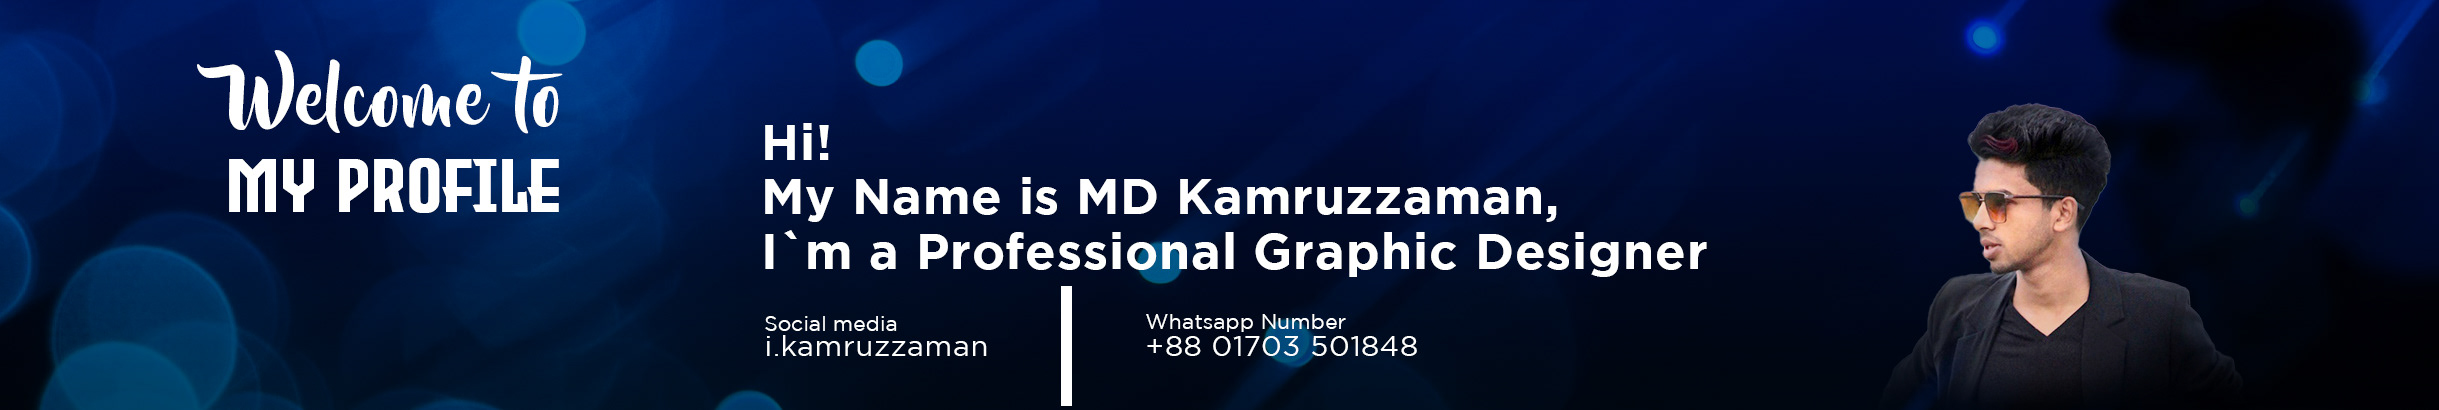 MD Kamruzzaman's profile banner